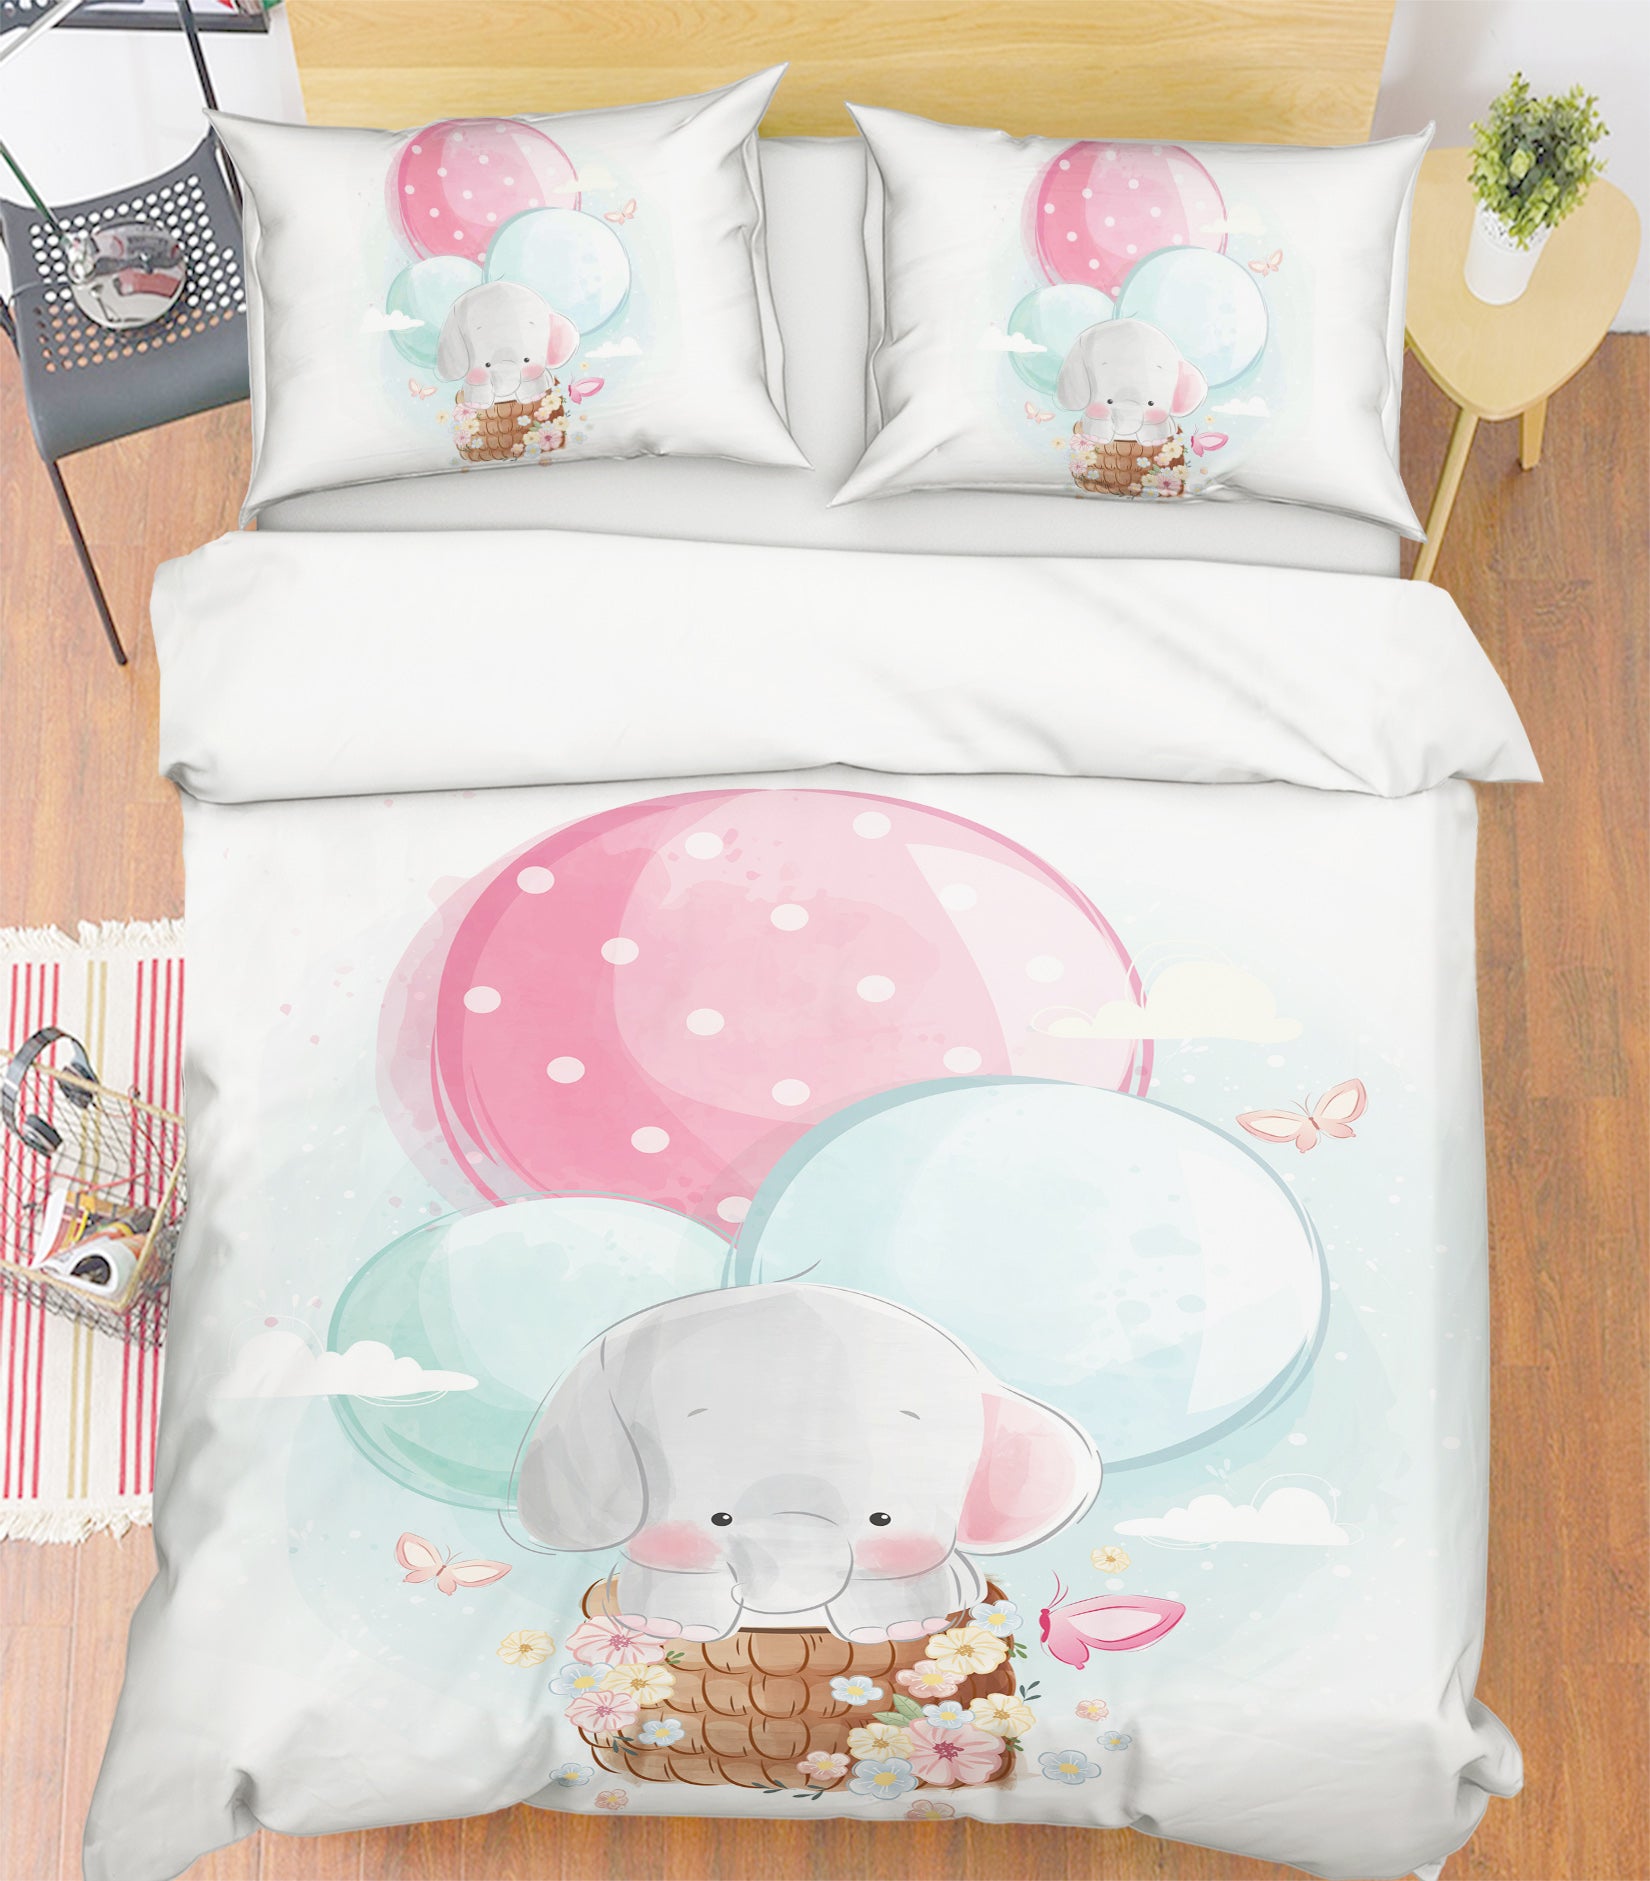 3D Balloon Elephant 64013 Bed Pillowcases Quilt